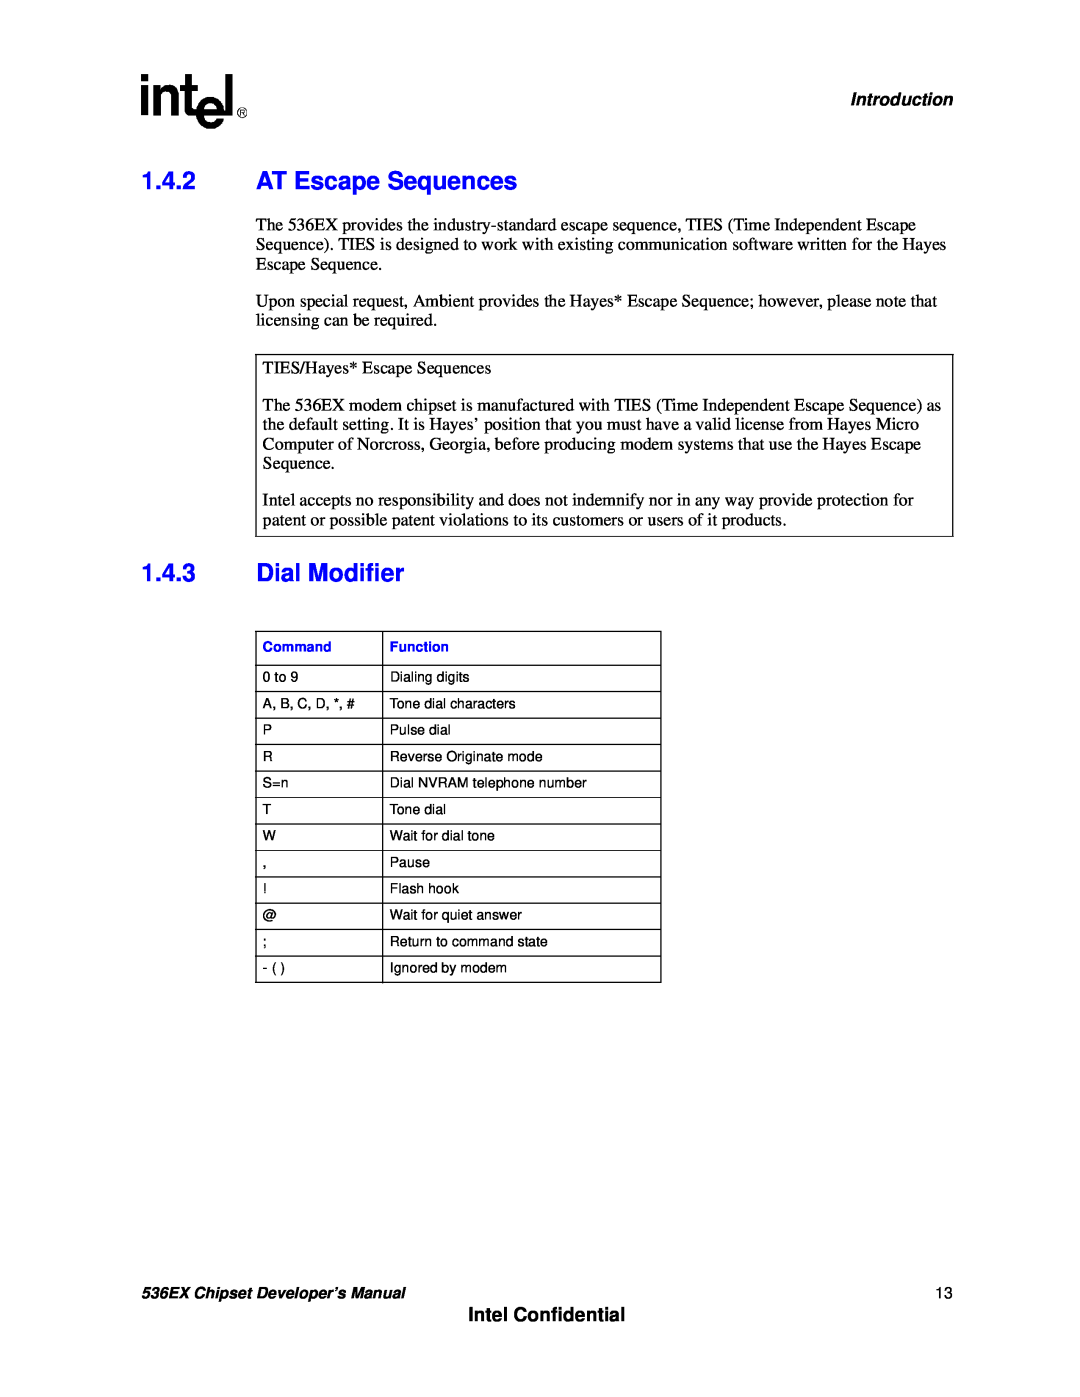 Intel 537EX manual 1.4.2AT Escape Sequences, 1.4.3Dial Modifier, Intel Confidential, Introduction 